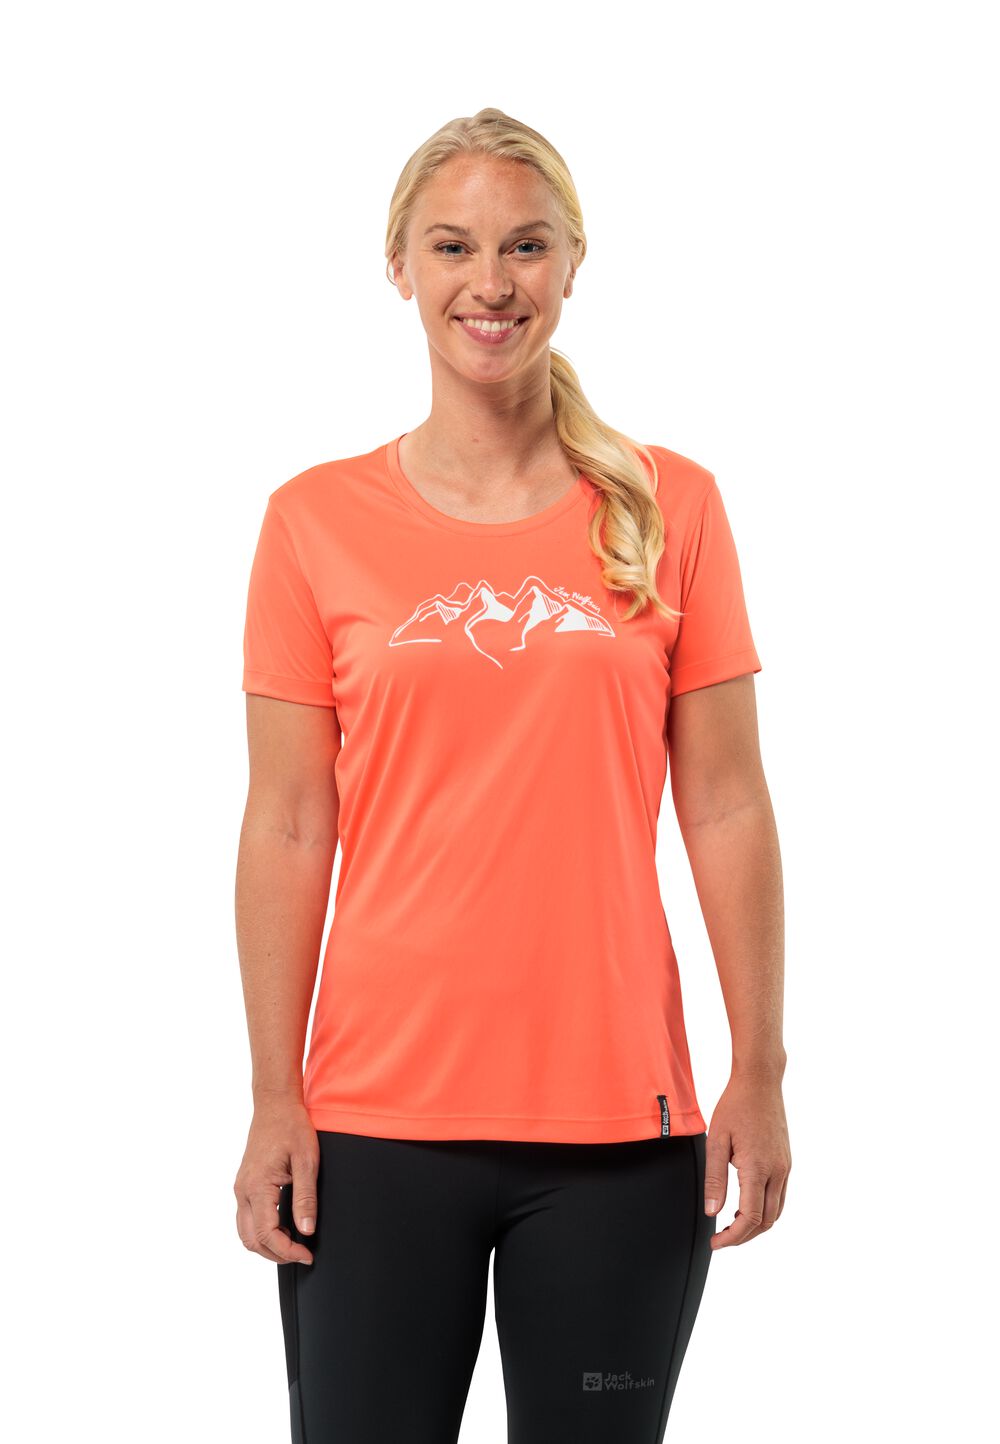 Jack Wolfskin Peak Graphic T-Shirt Women Functioneel shirt Dames XXL rood digital orange